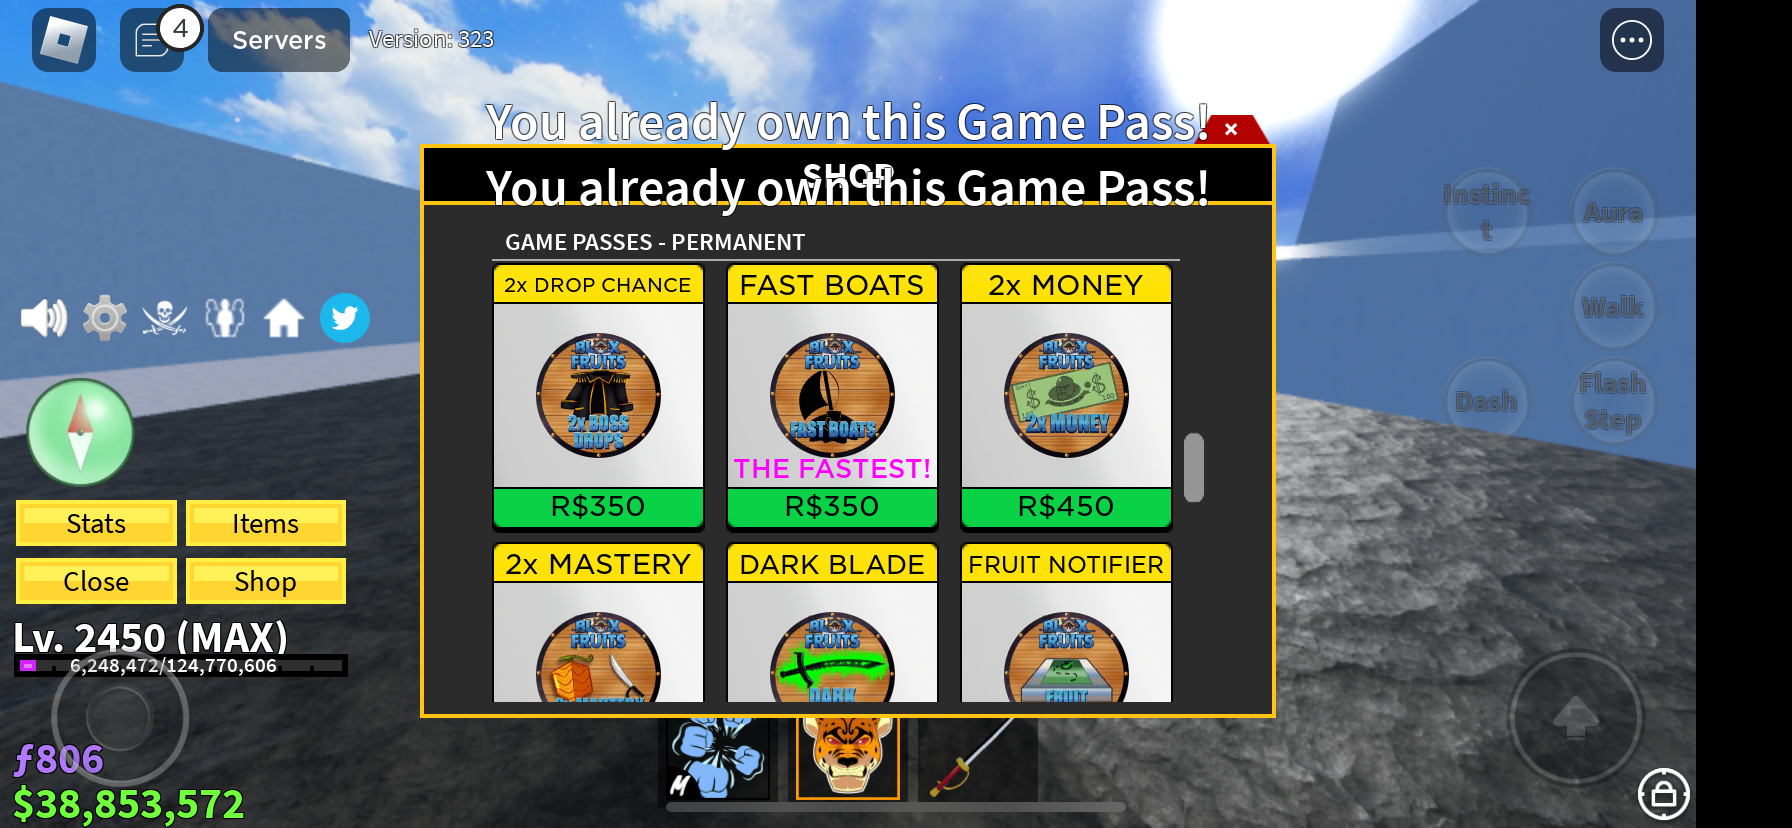 Blox fruit account maximum level including game pass